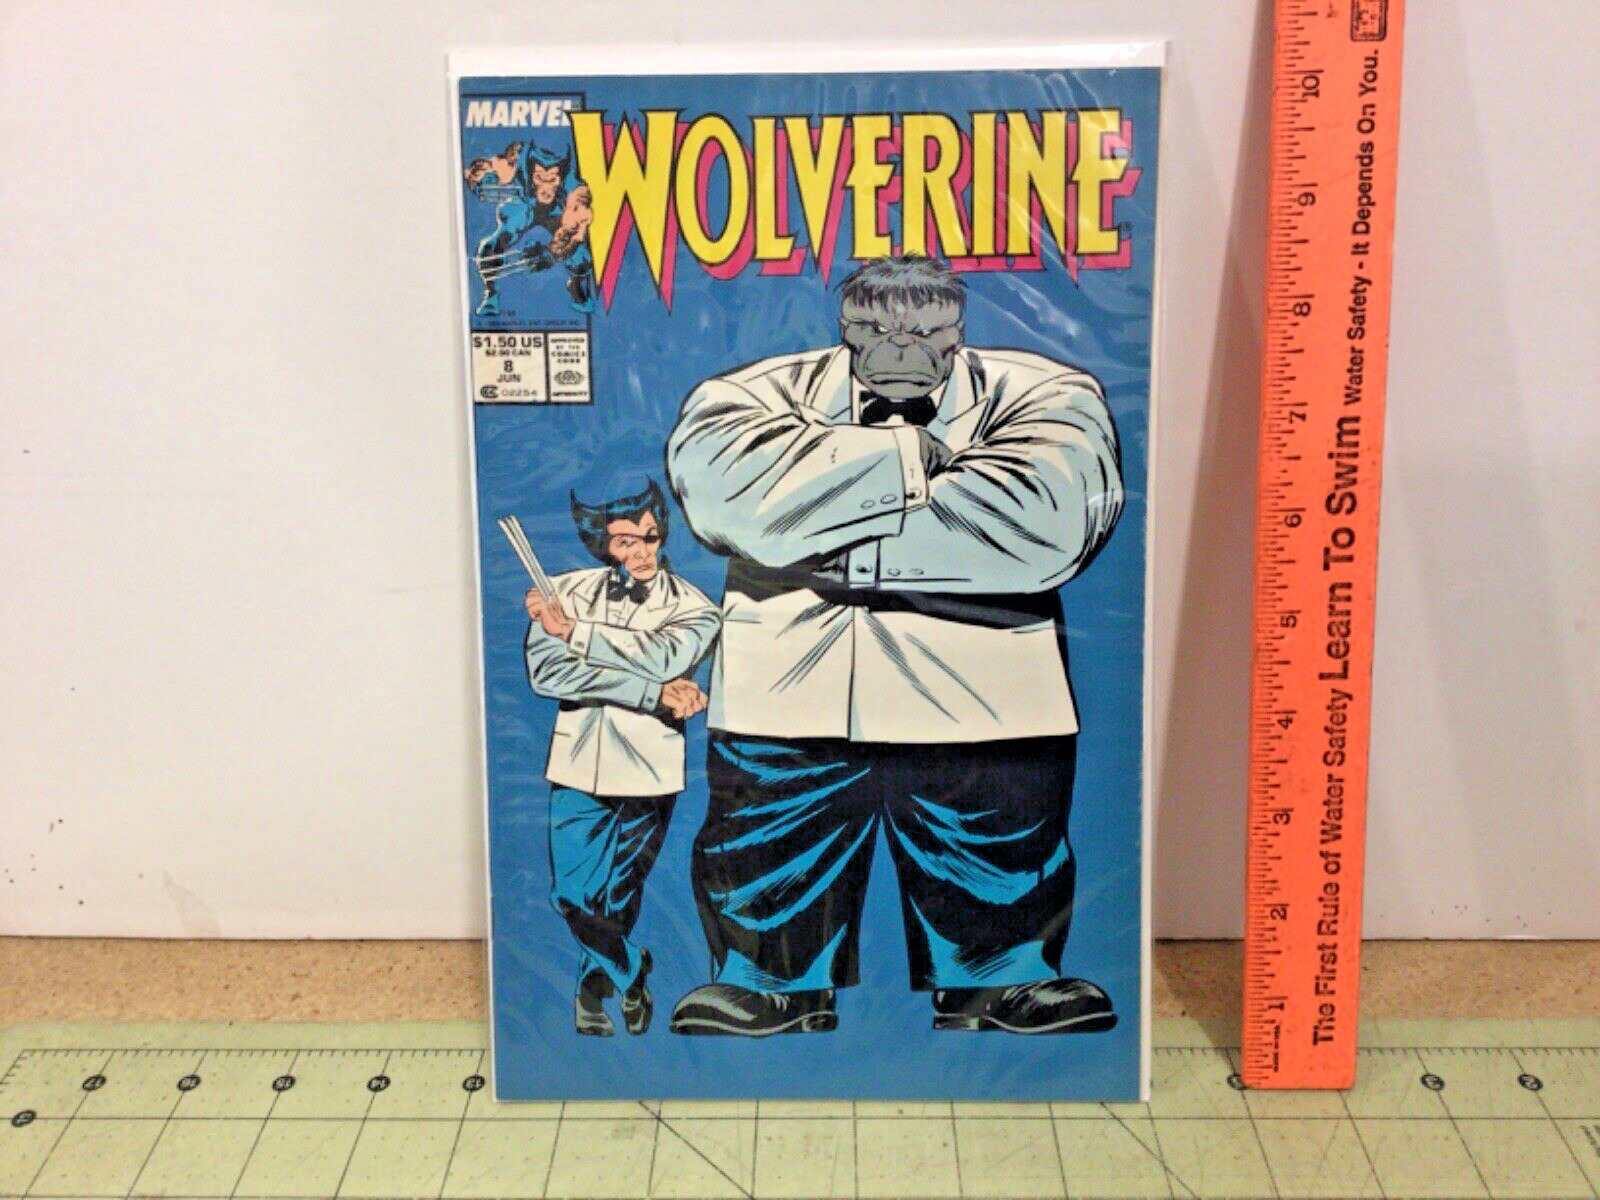 Marvel Comics Wolverine #8 comic featuring Grey Hulk key issue